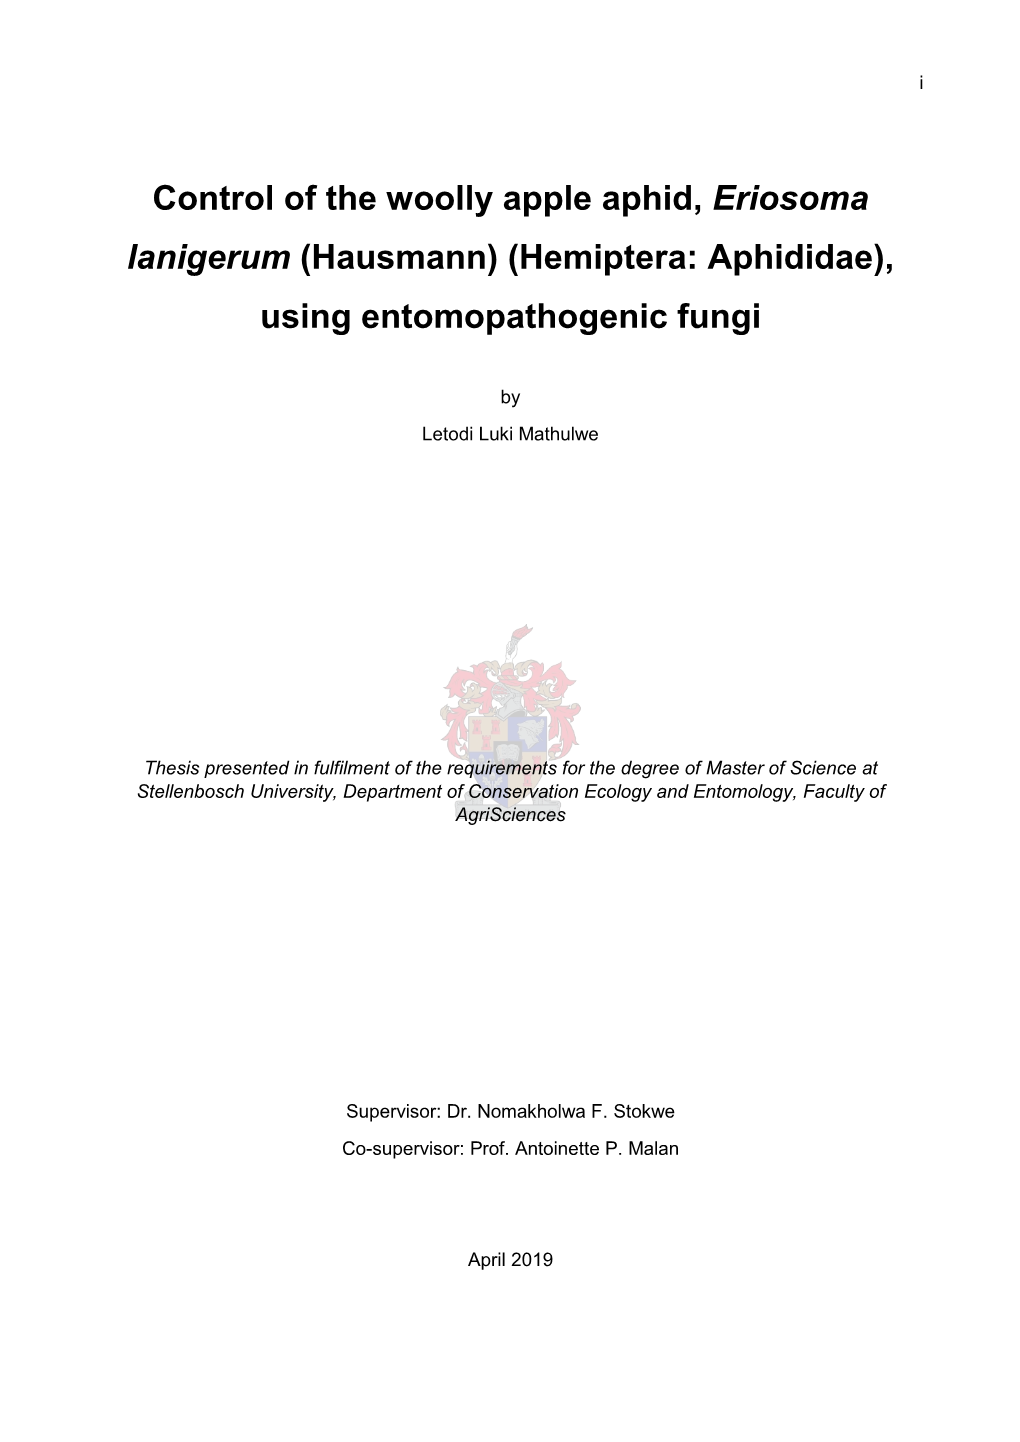 Control of the Woolly Apple Aphid, Eriosoma Lanigerum (Hausmann) (Hemiptera: Aphididae), Using Entomopathogenic Fungi